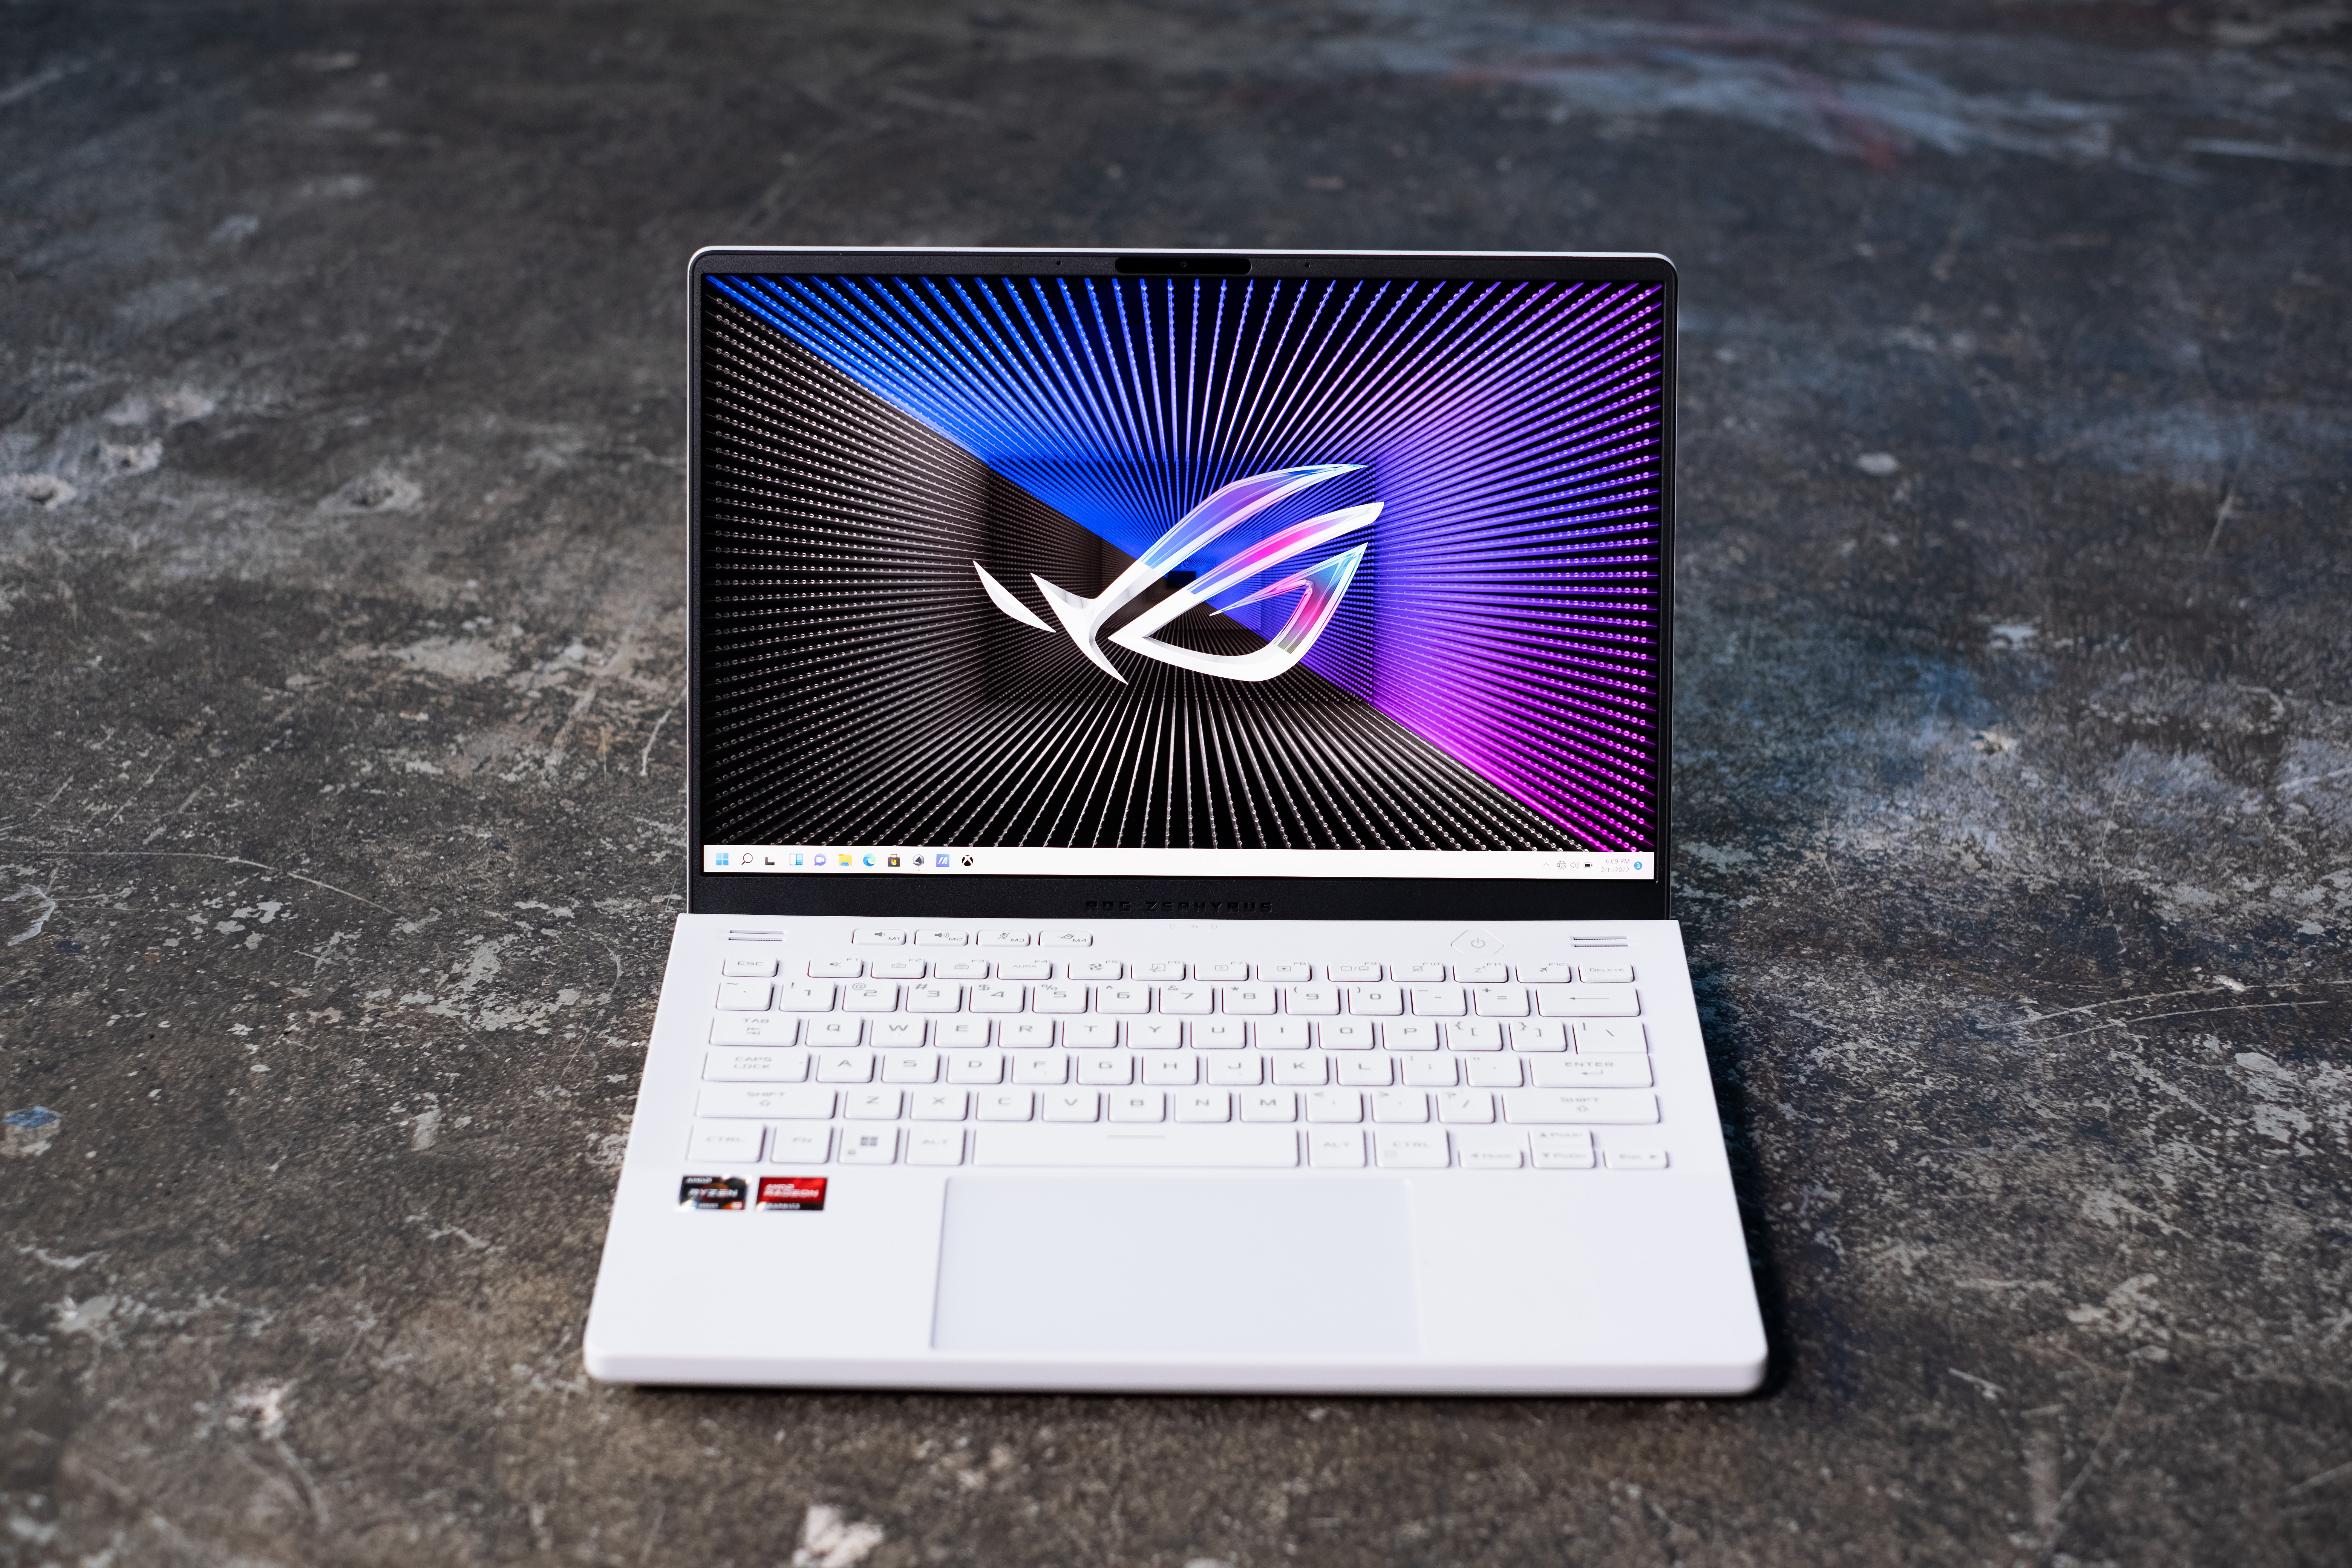 Asus ROG Zephyrus G14 (2022) - Most portable gaming laptop